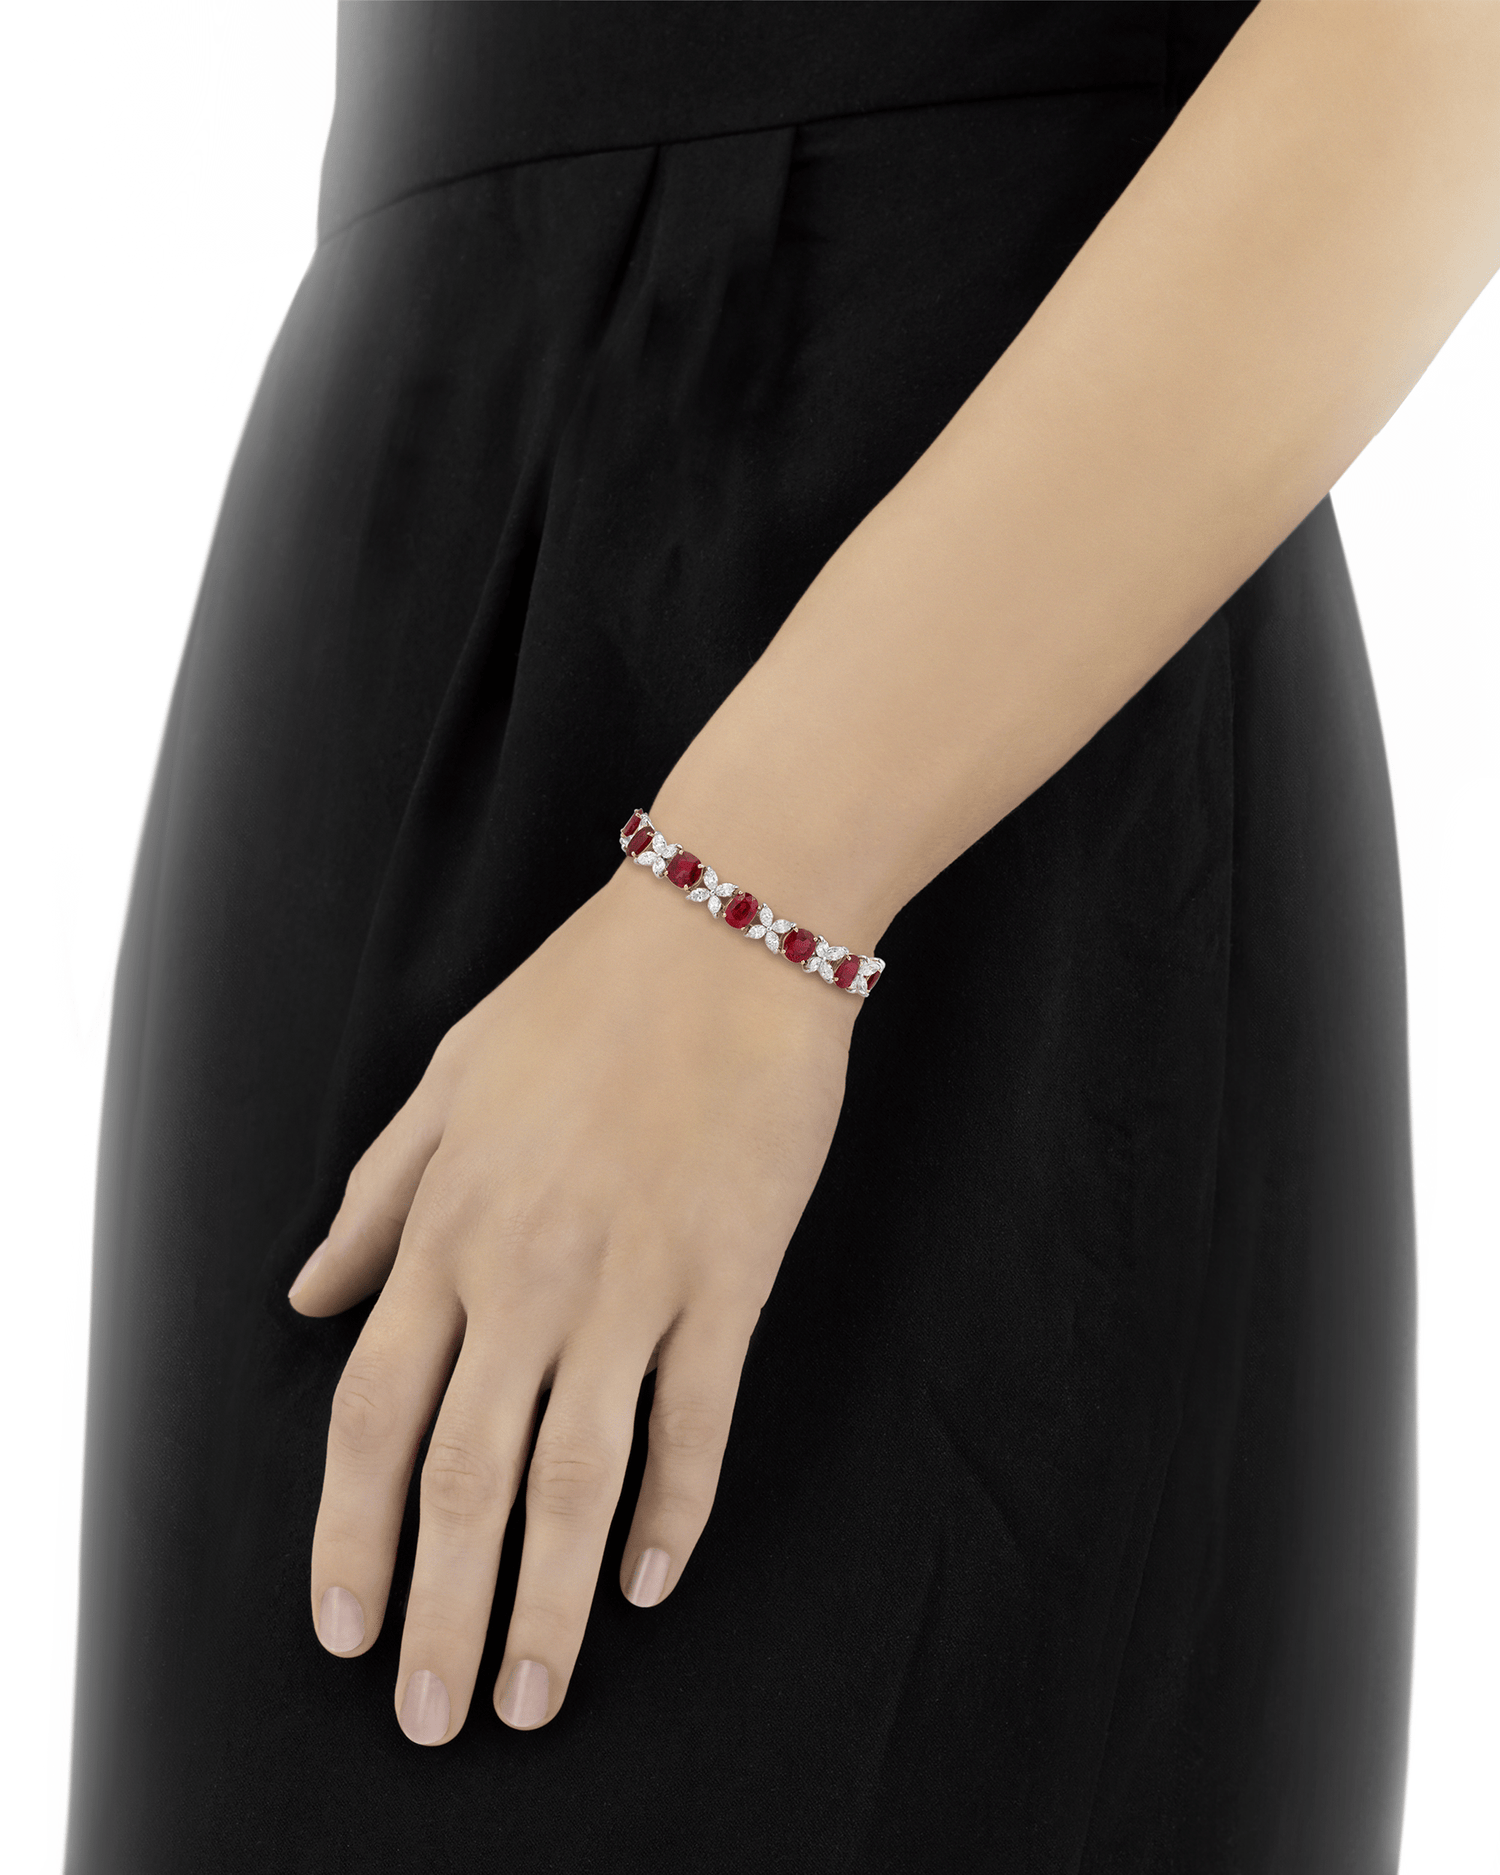 Untreated Burma Ruby and Diamond Bracelet, 21.16 Carats